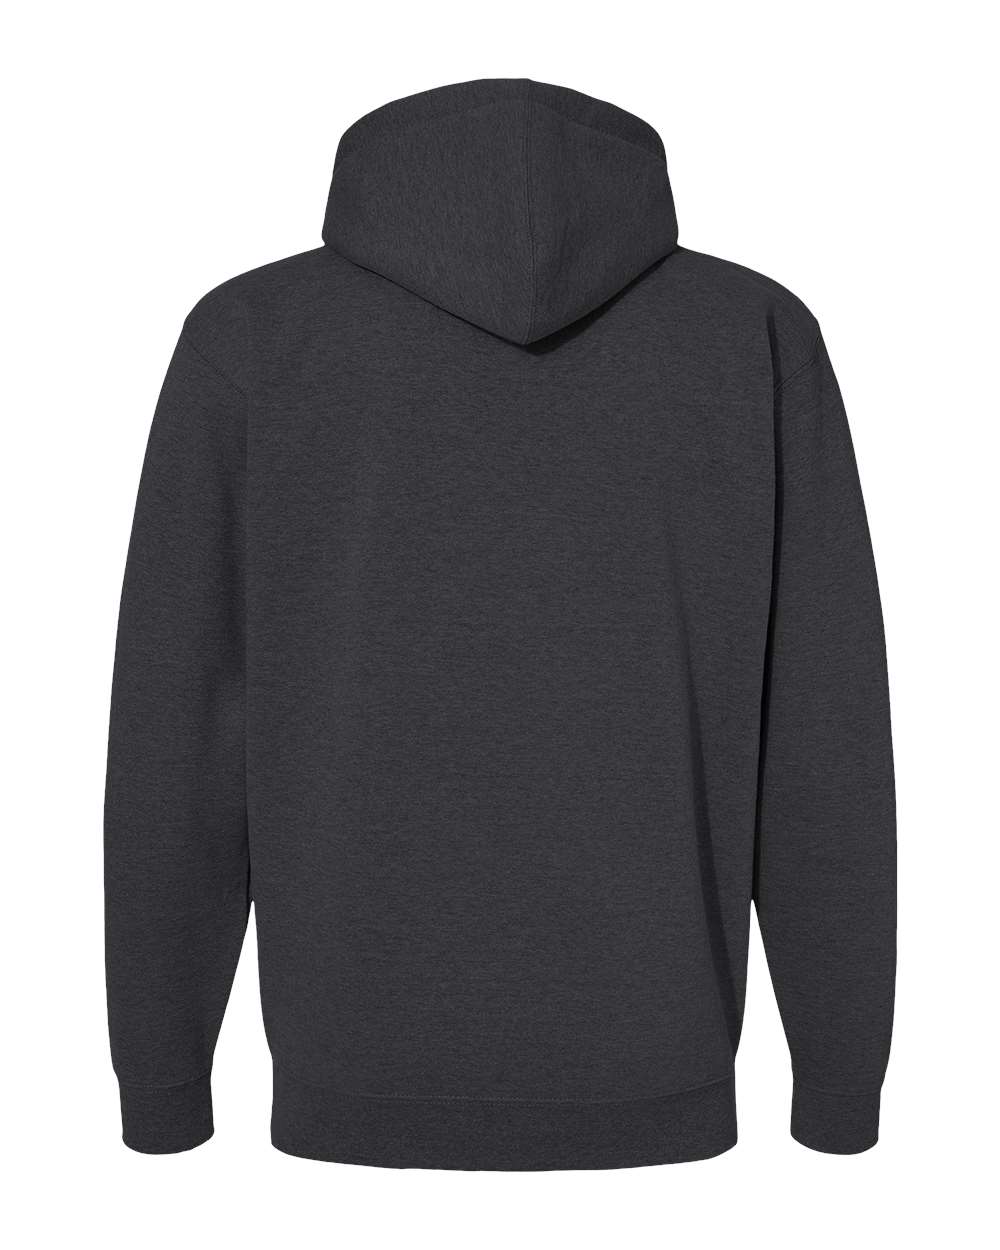 Download Independent Trading Co Mens Hooded Full-Zip Sweatshirt ...